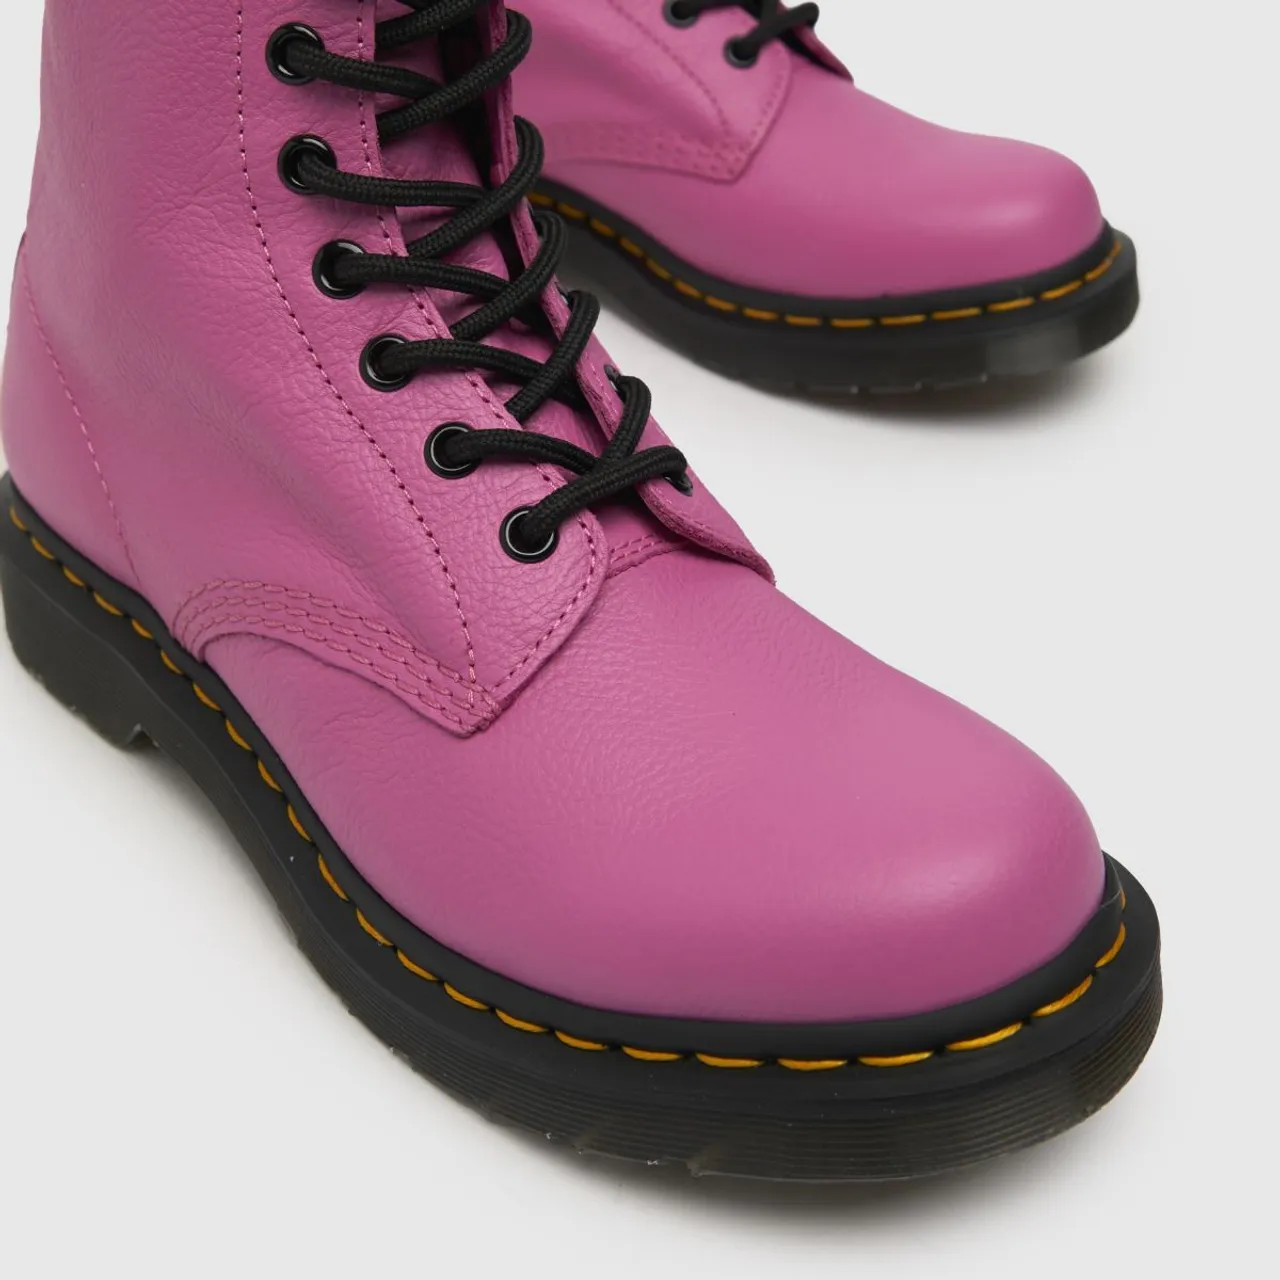 Dr. Martens Women's Pink 1460 Pascal 8 Eye Boots